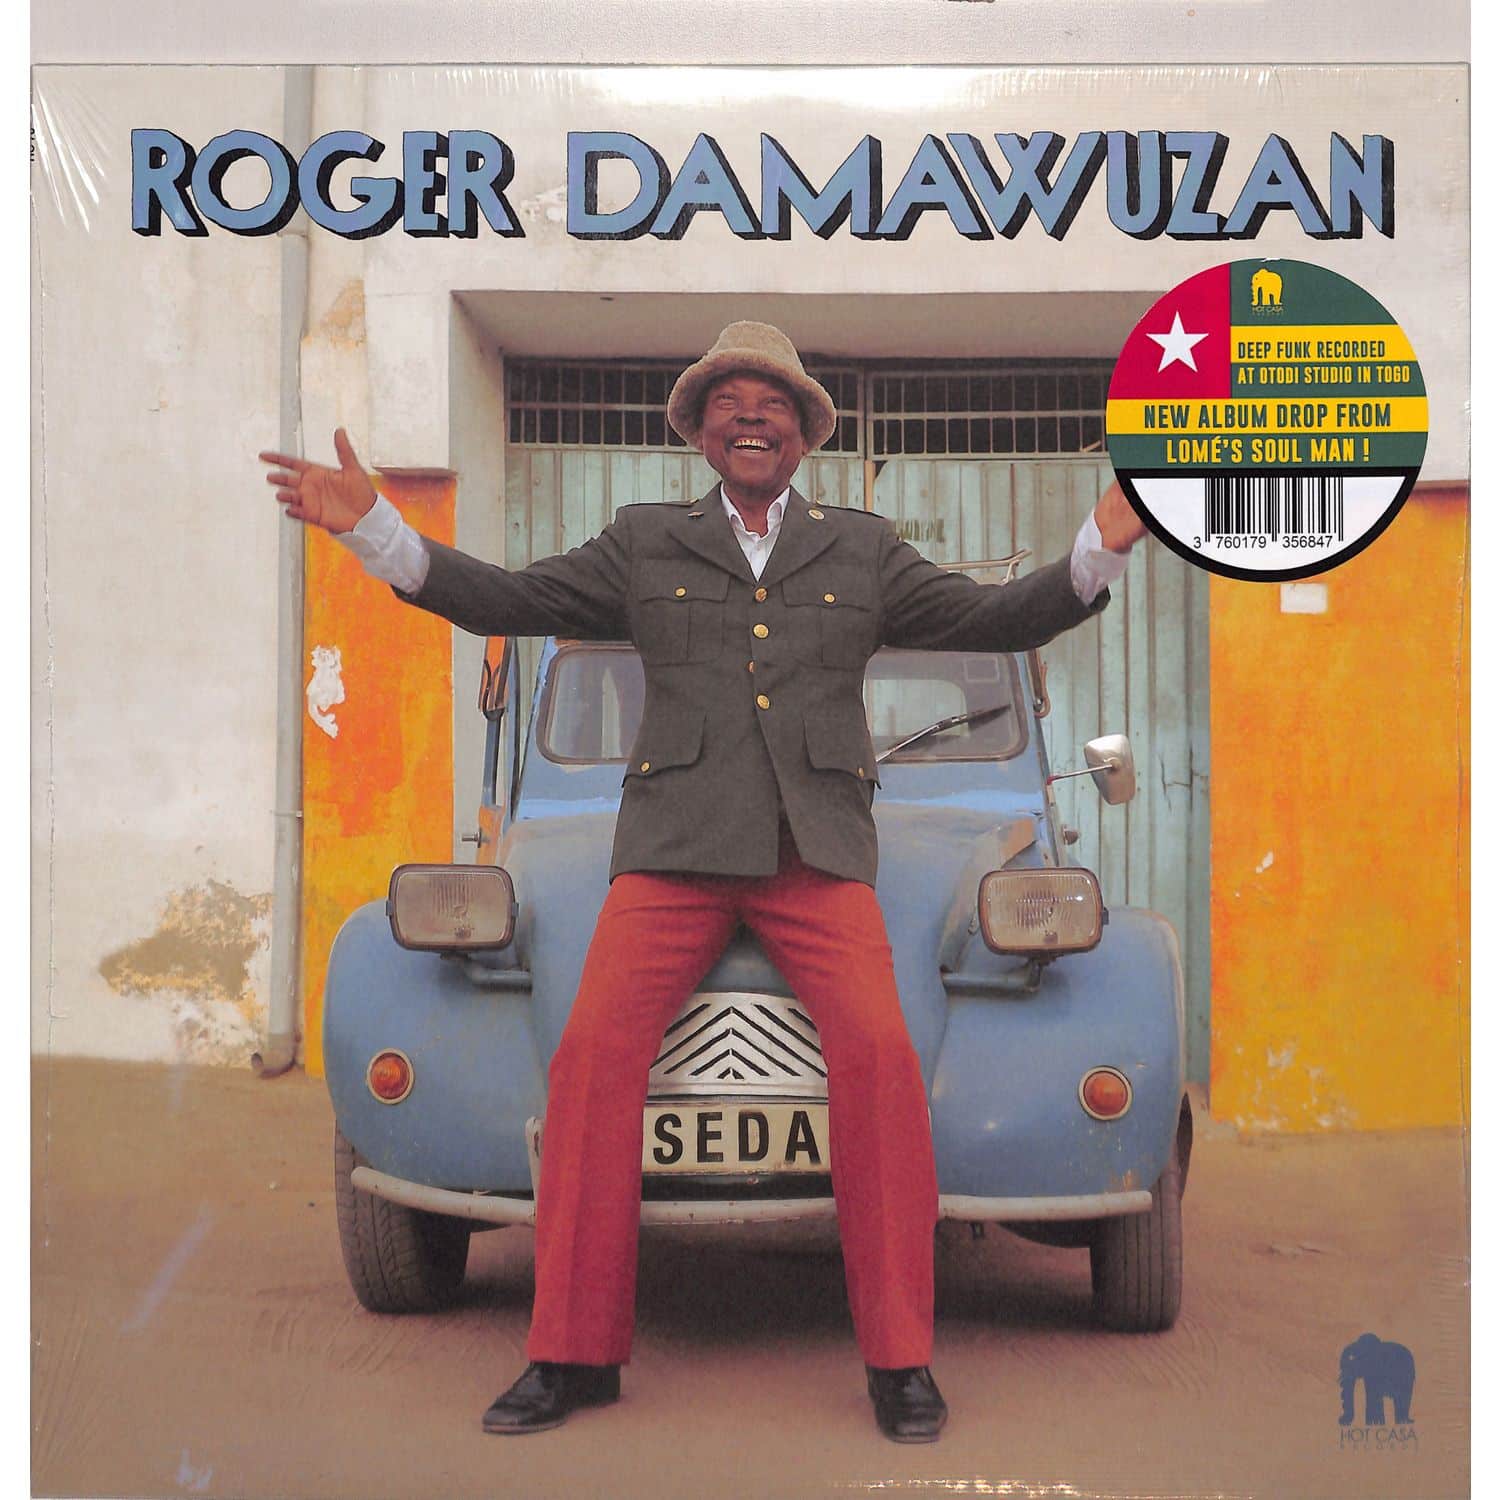 Roger Damawuzan - SEDA 